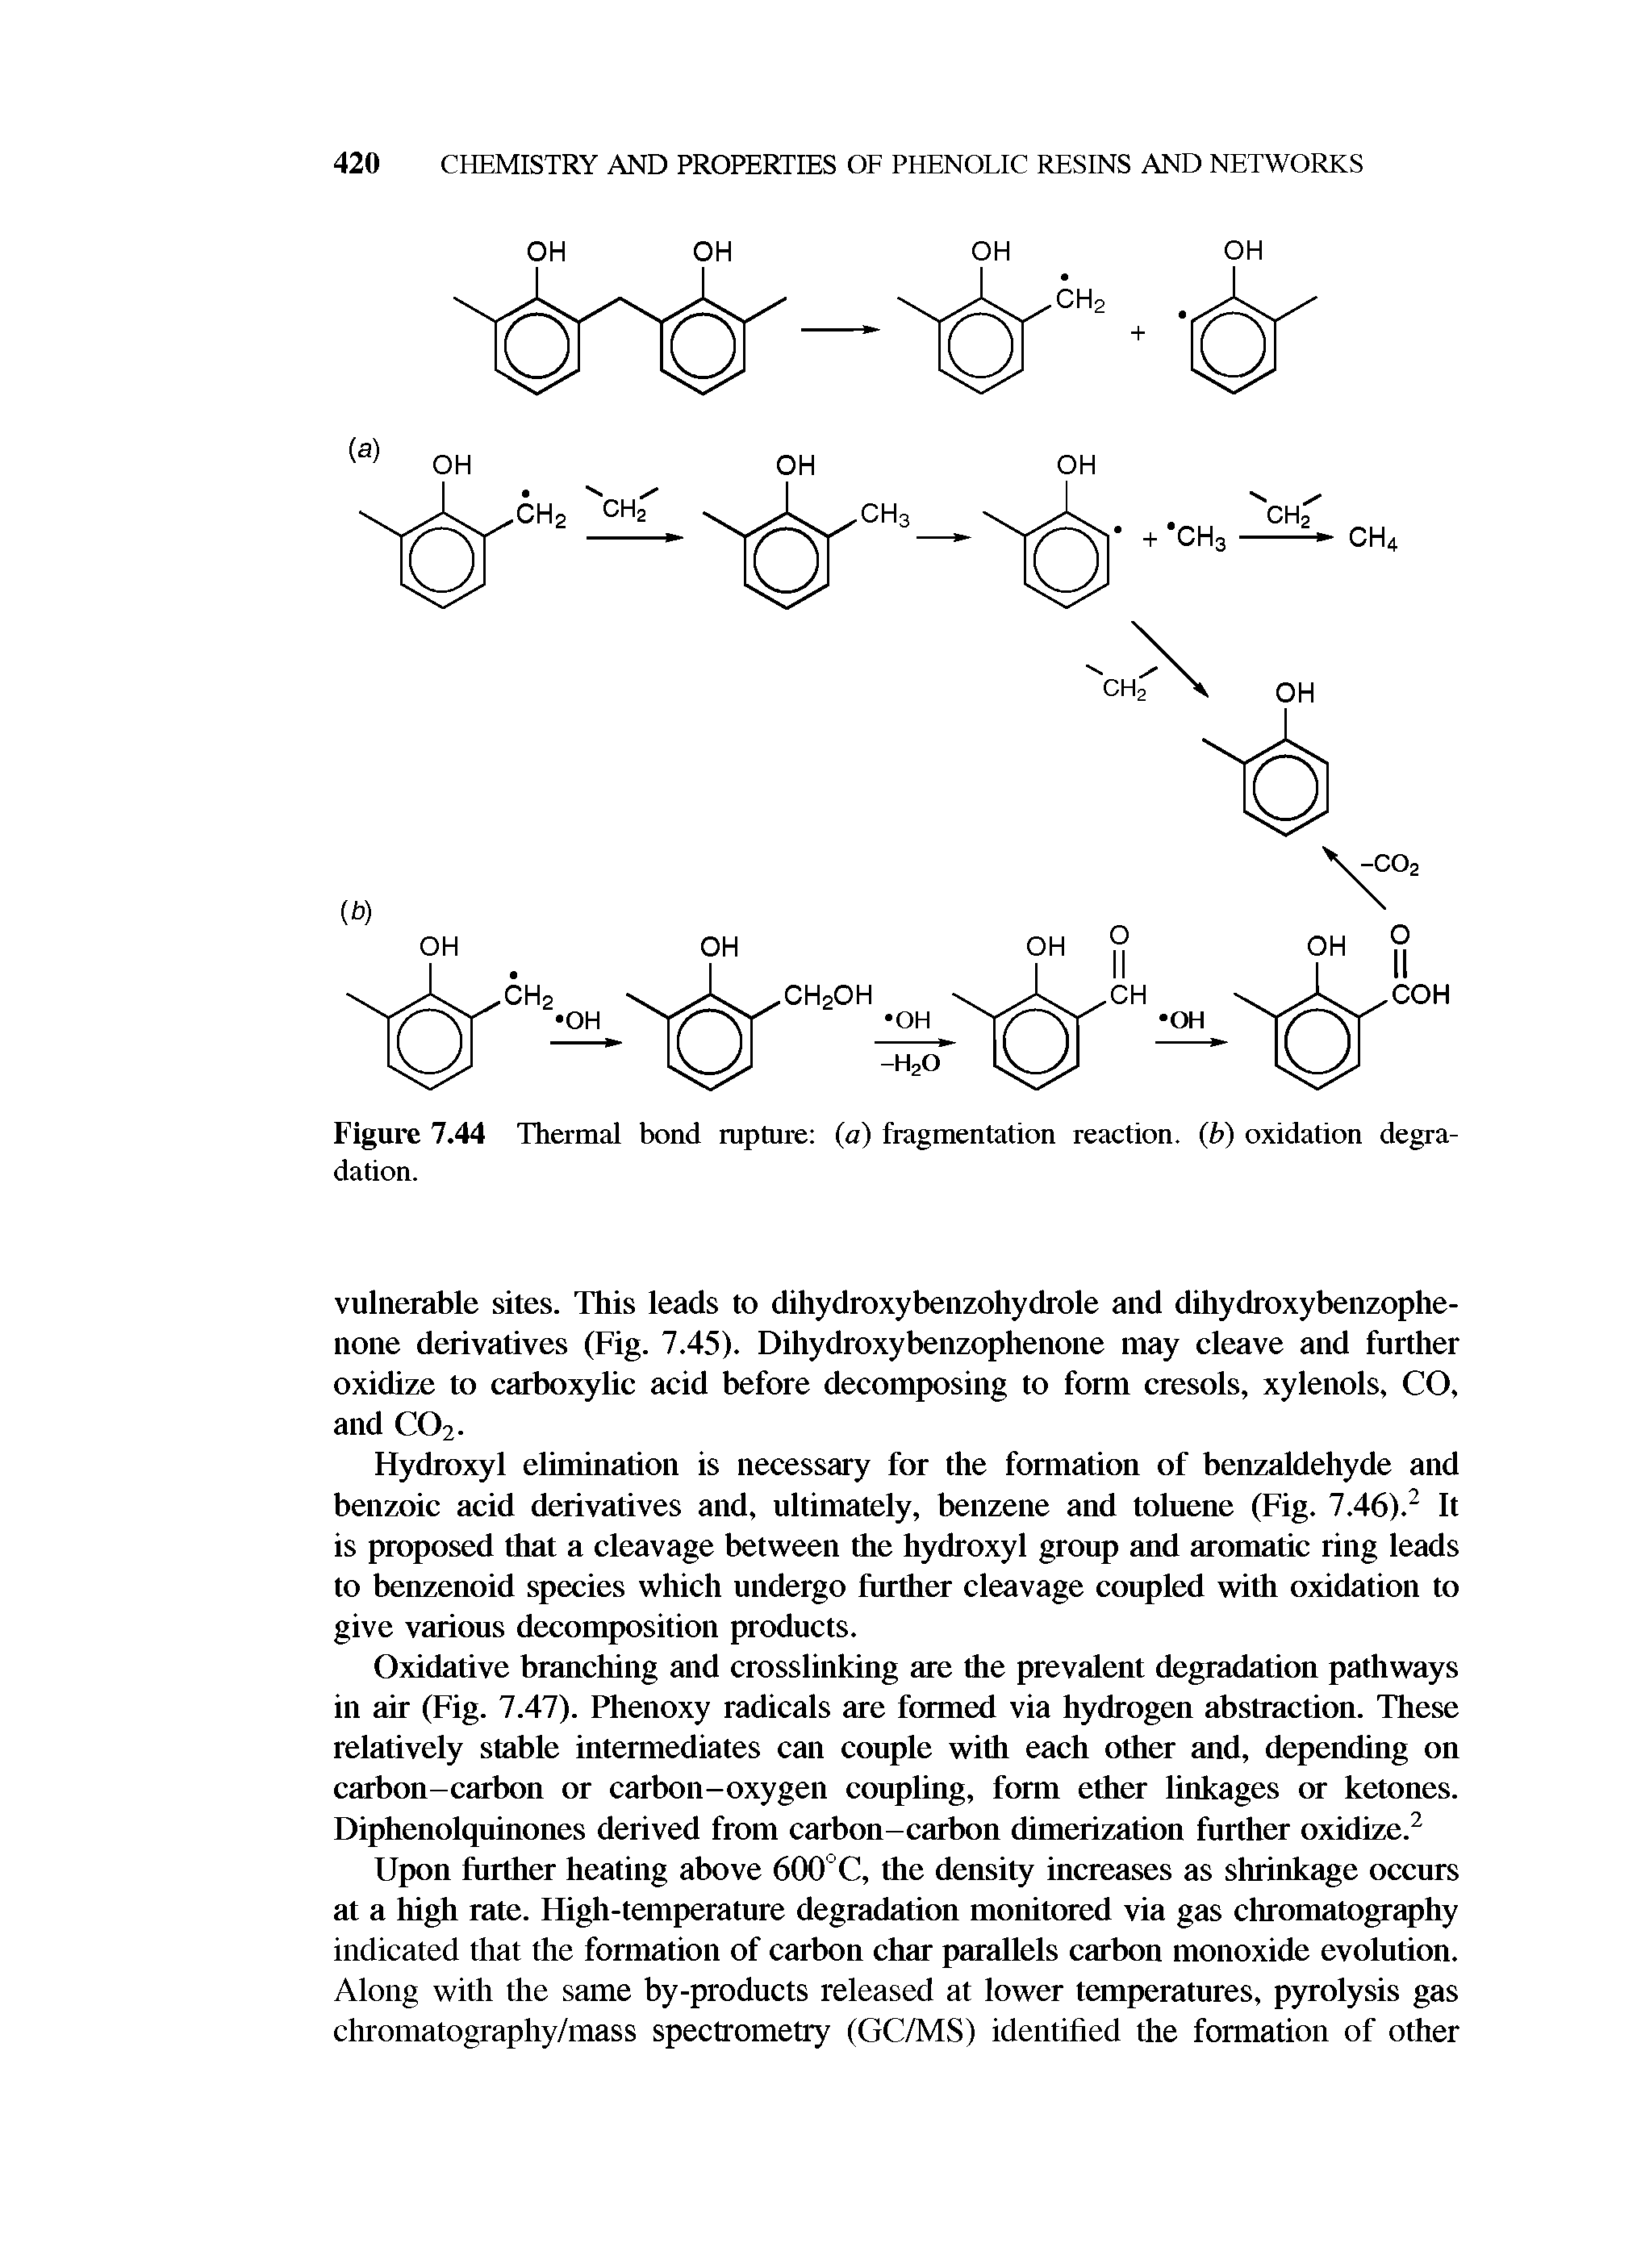 Figure 7.44 Thermal bond rupture (a) fragmentation reaction, (b) oxidation degradation.